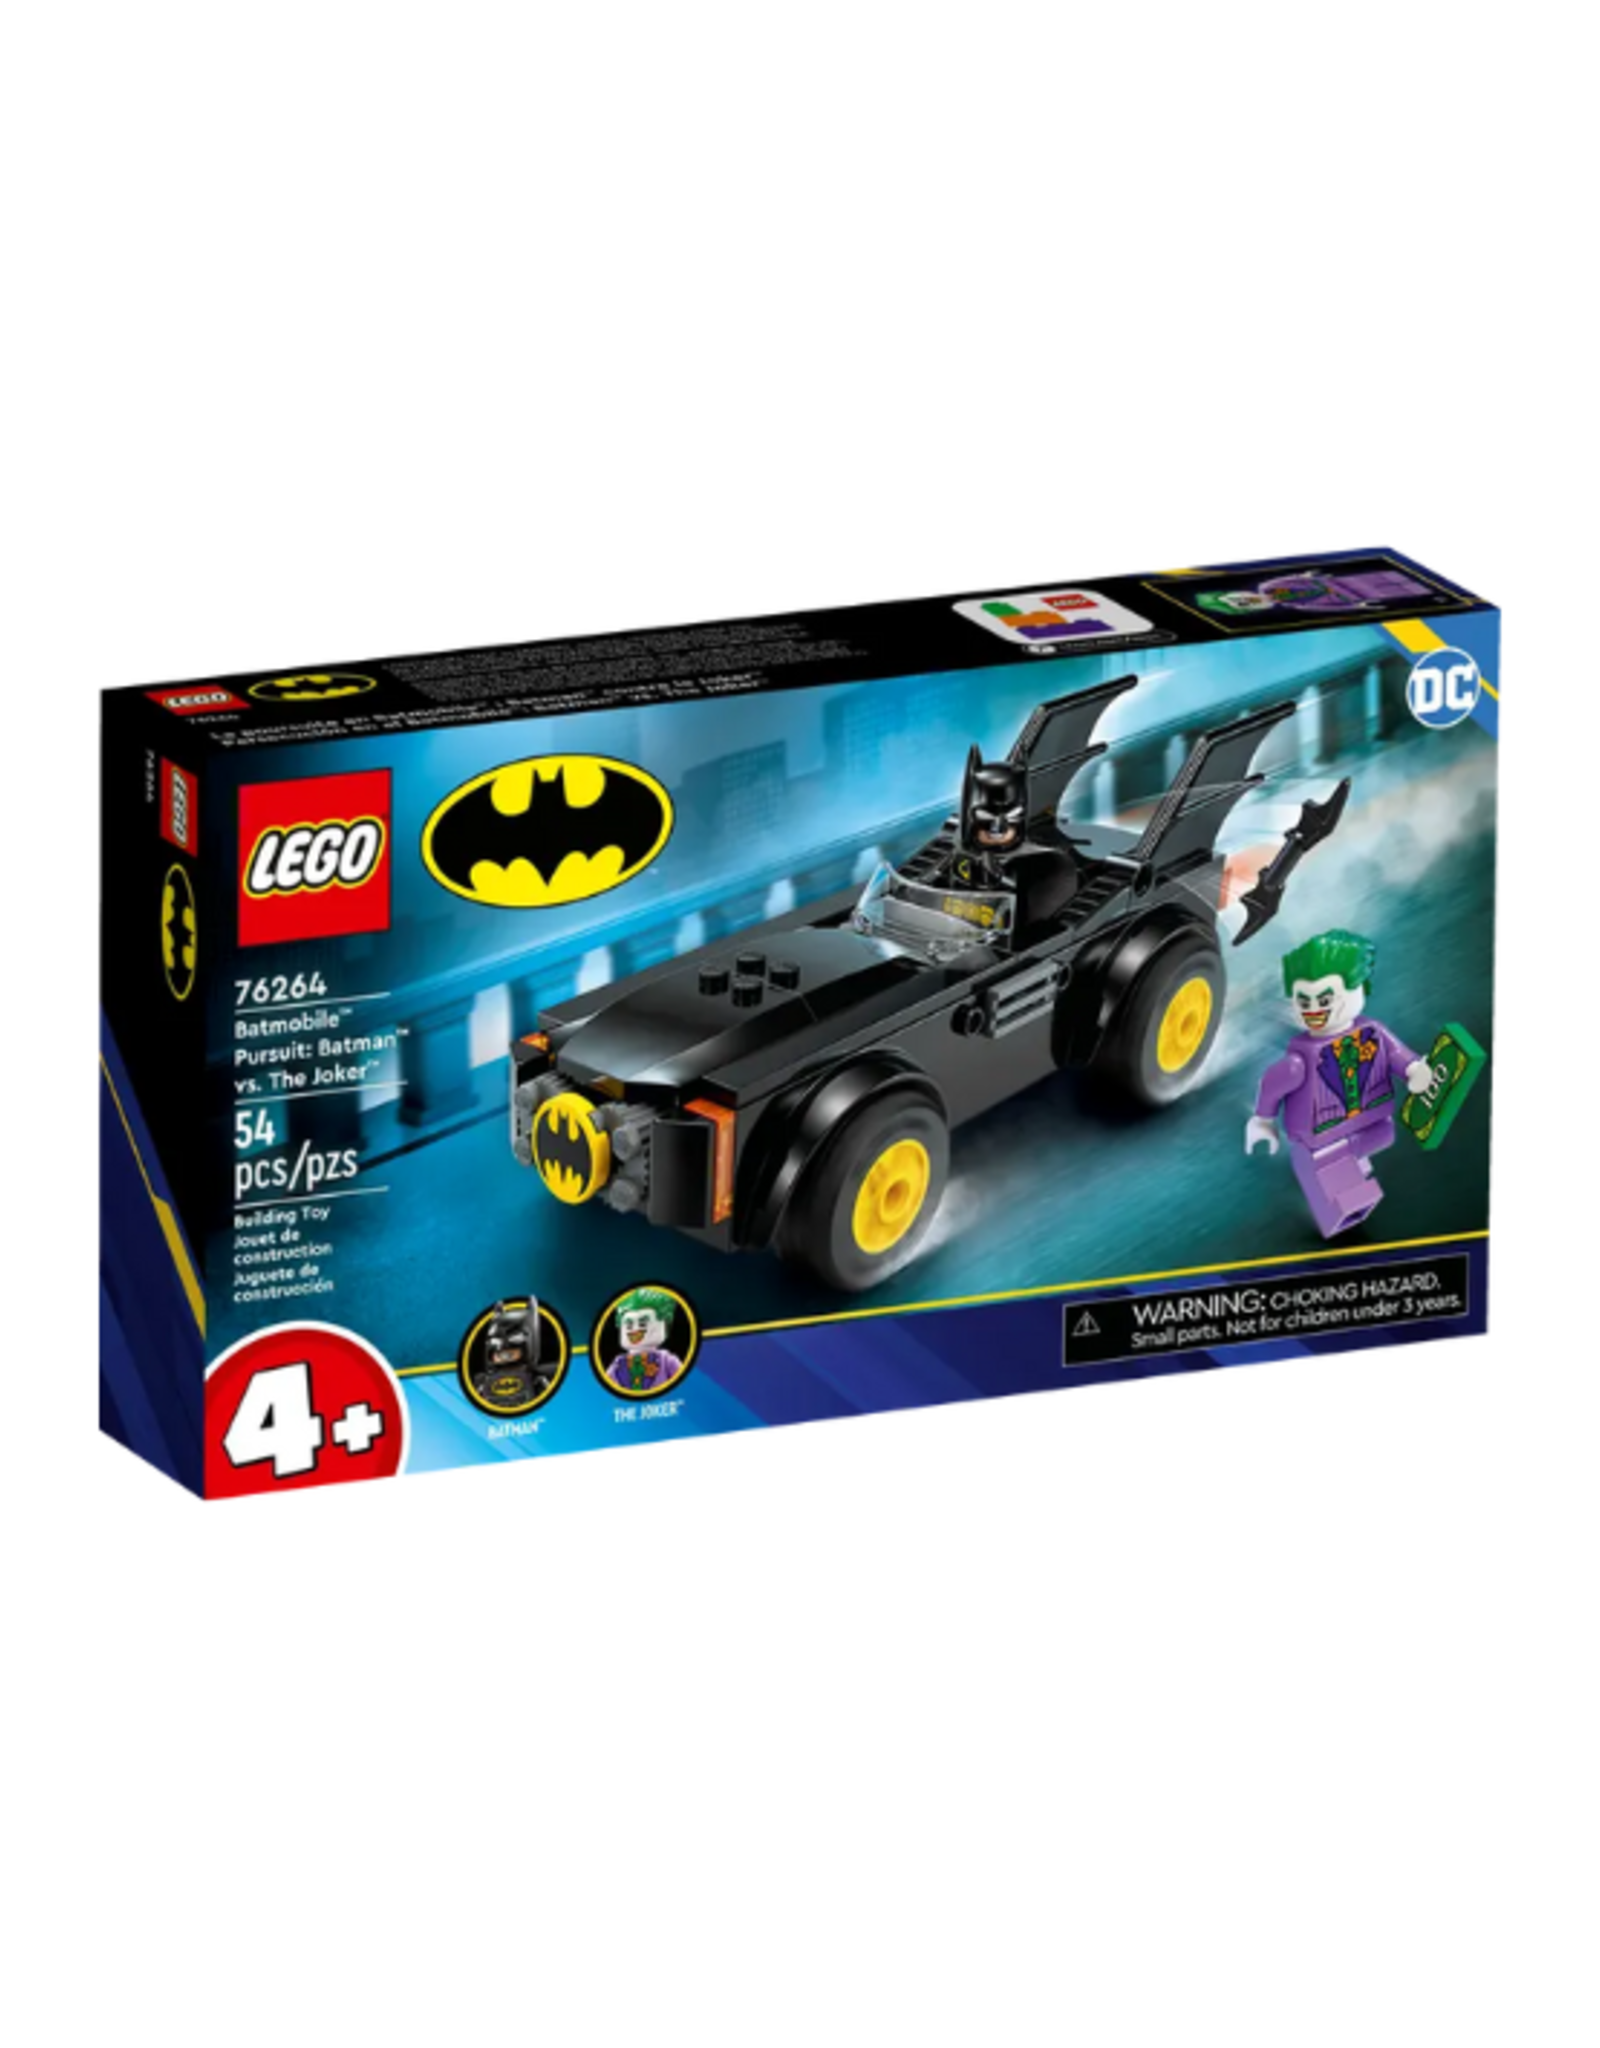 Lego - Batman - 76264 - Batmobile™ Pursuit: Batman™ vs. The Joker